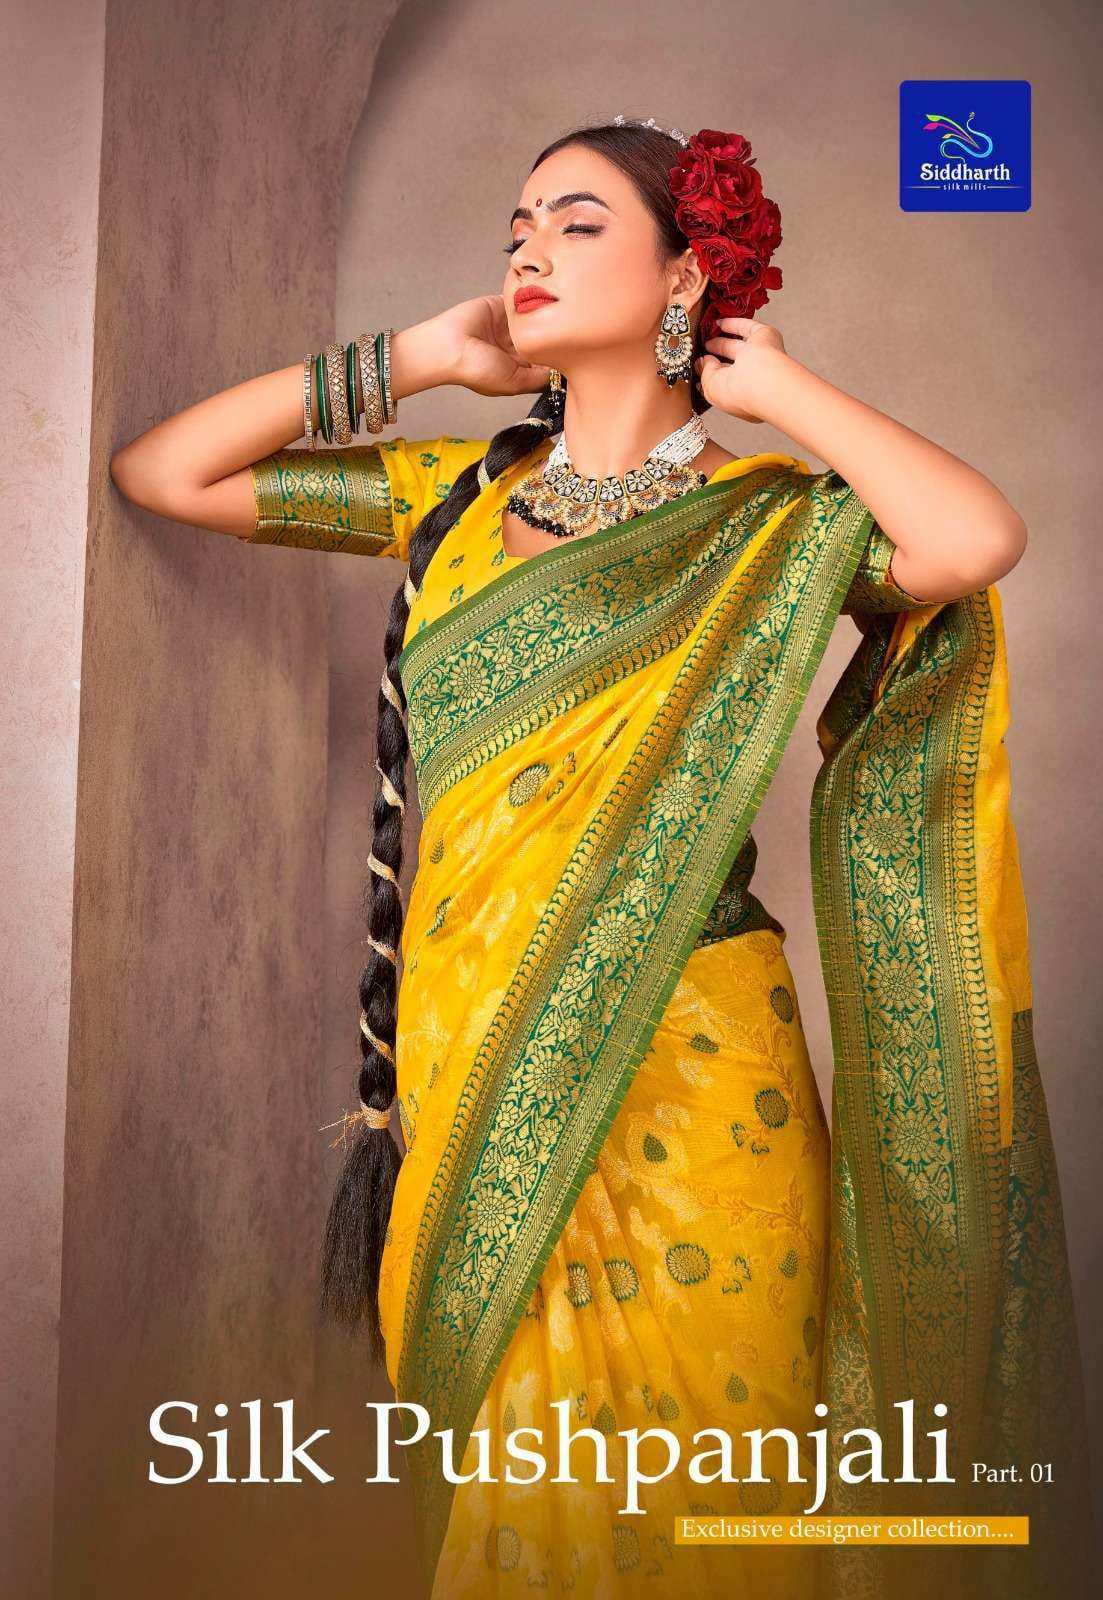 siddharth silk pushpanjali series 3801-3806 fancy saree 